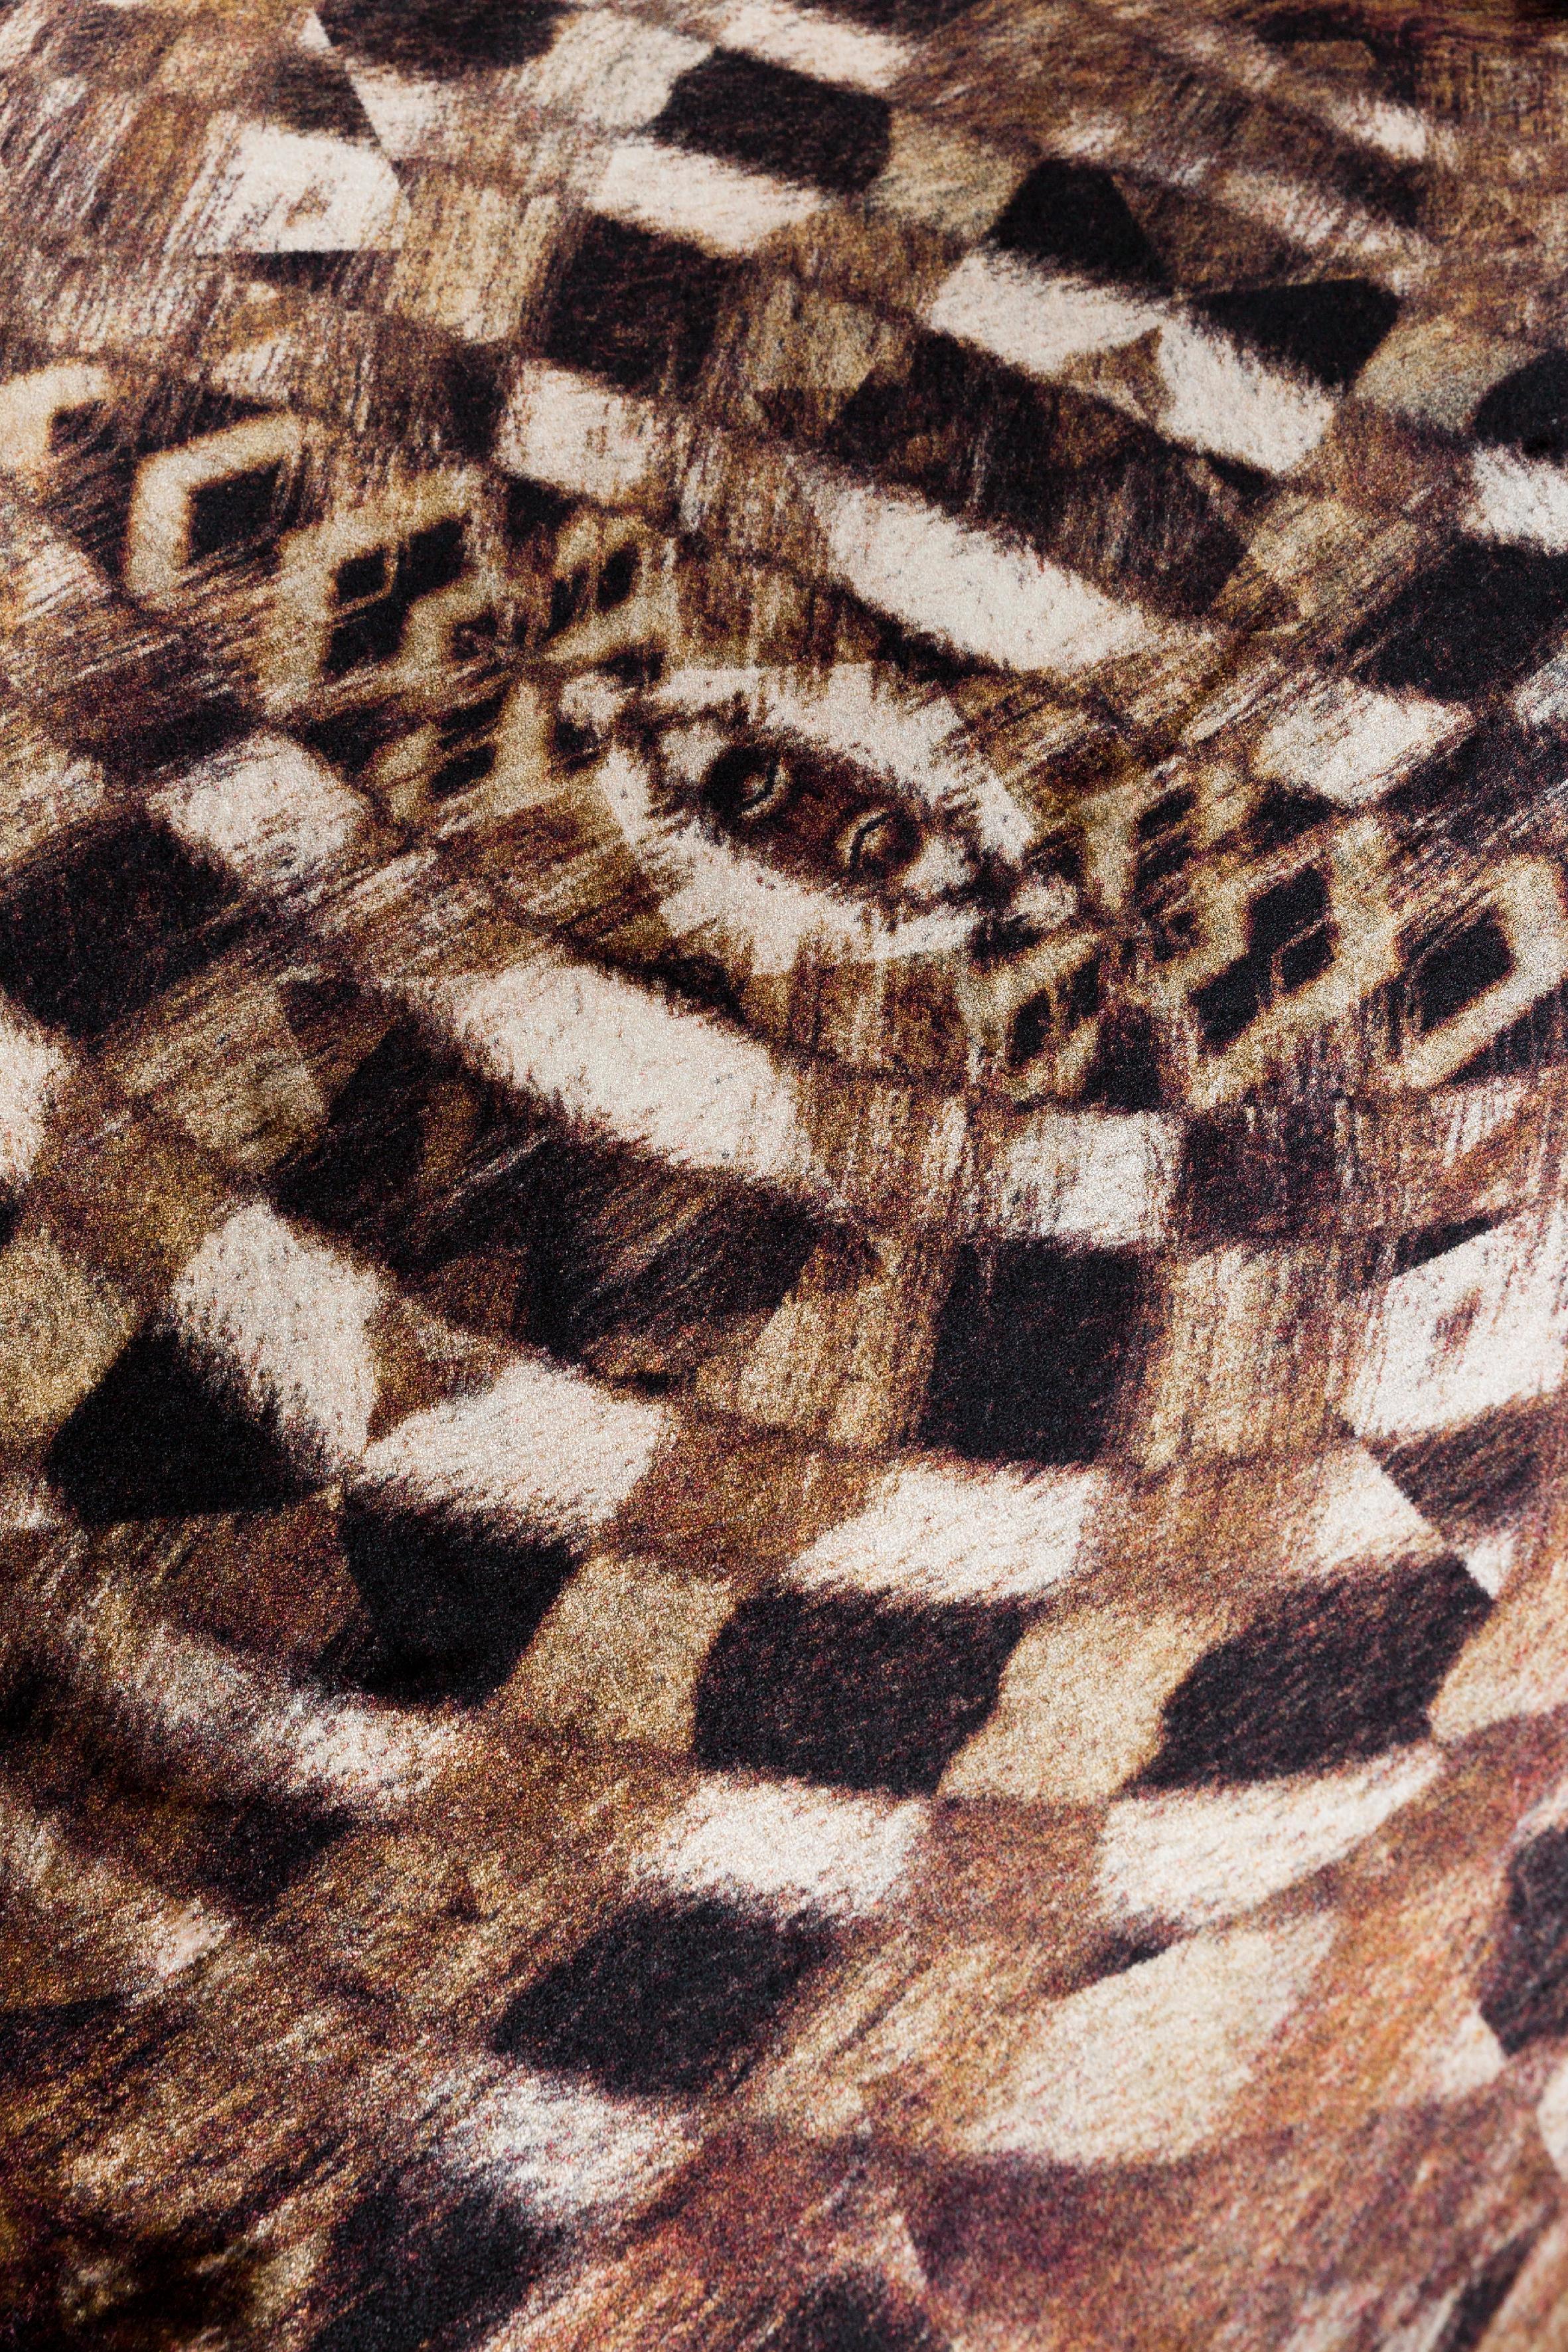 Moooi small extinct animals aristo quagga rug in low pile polyamide.

